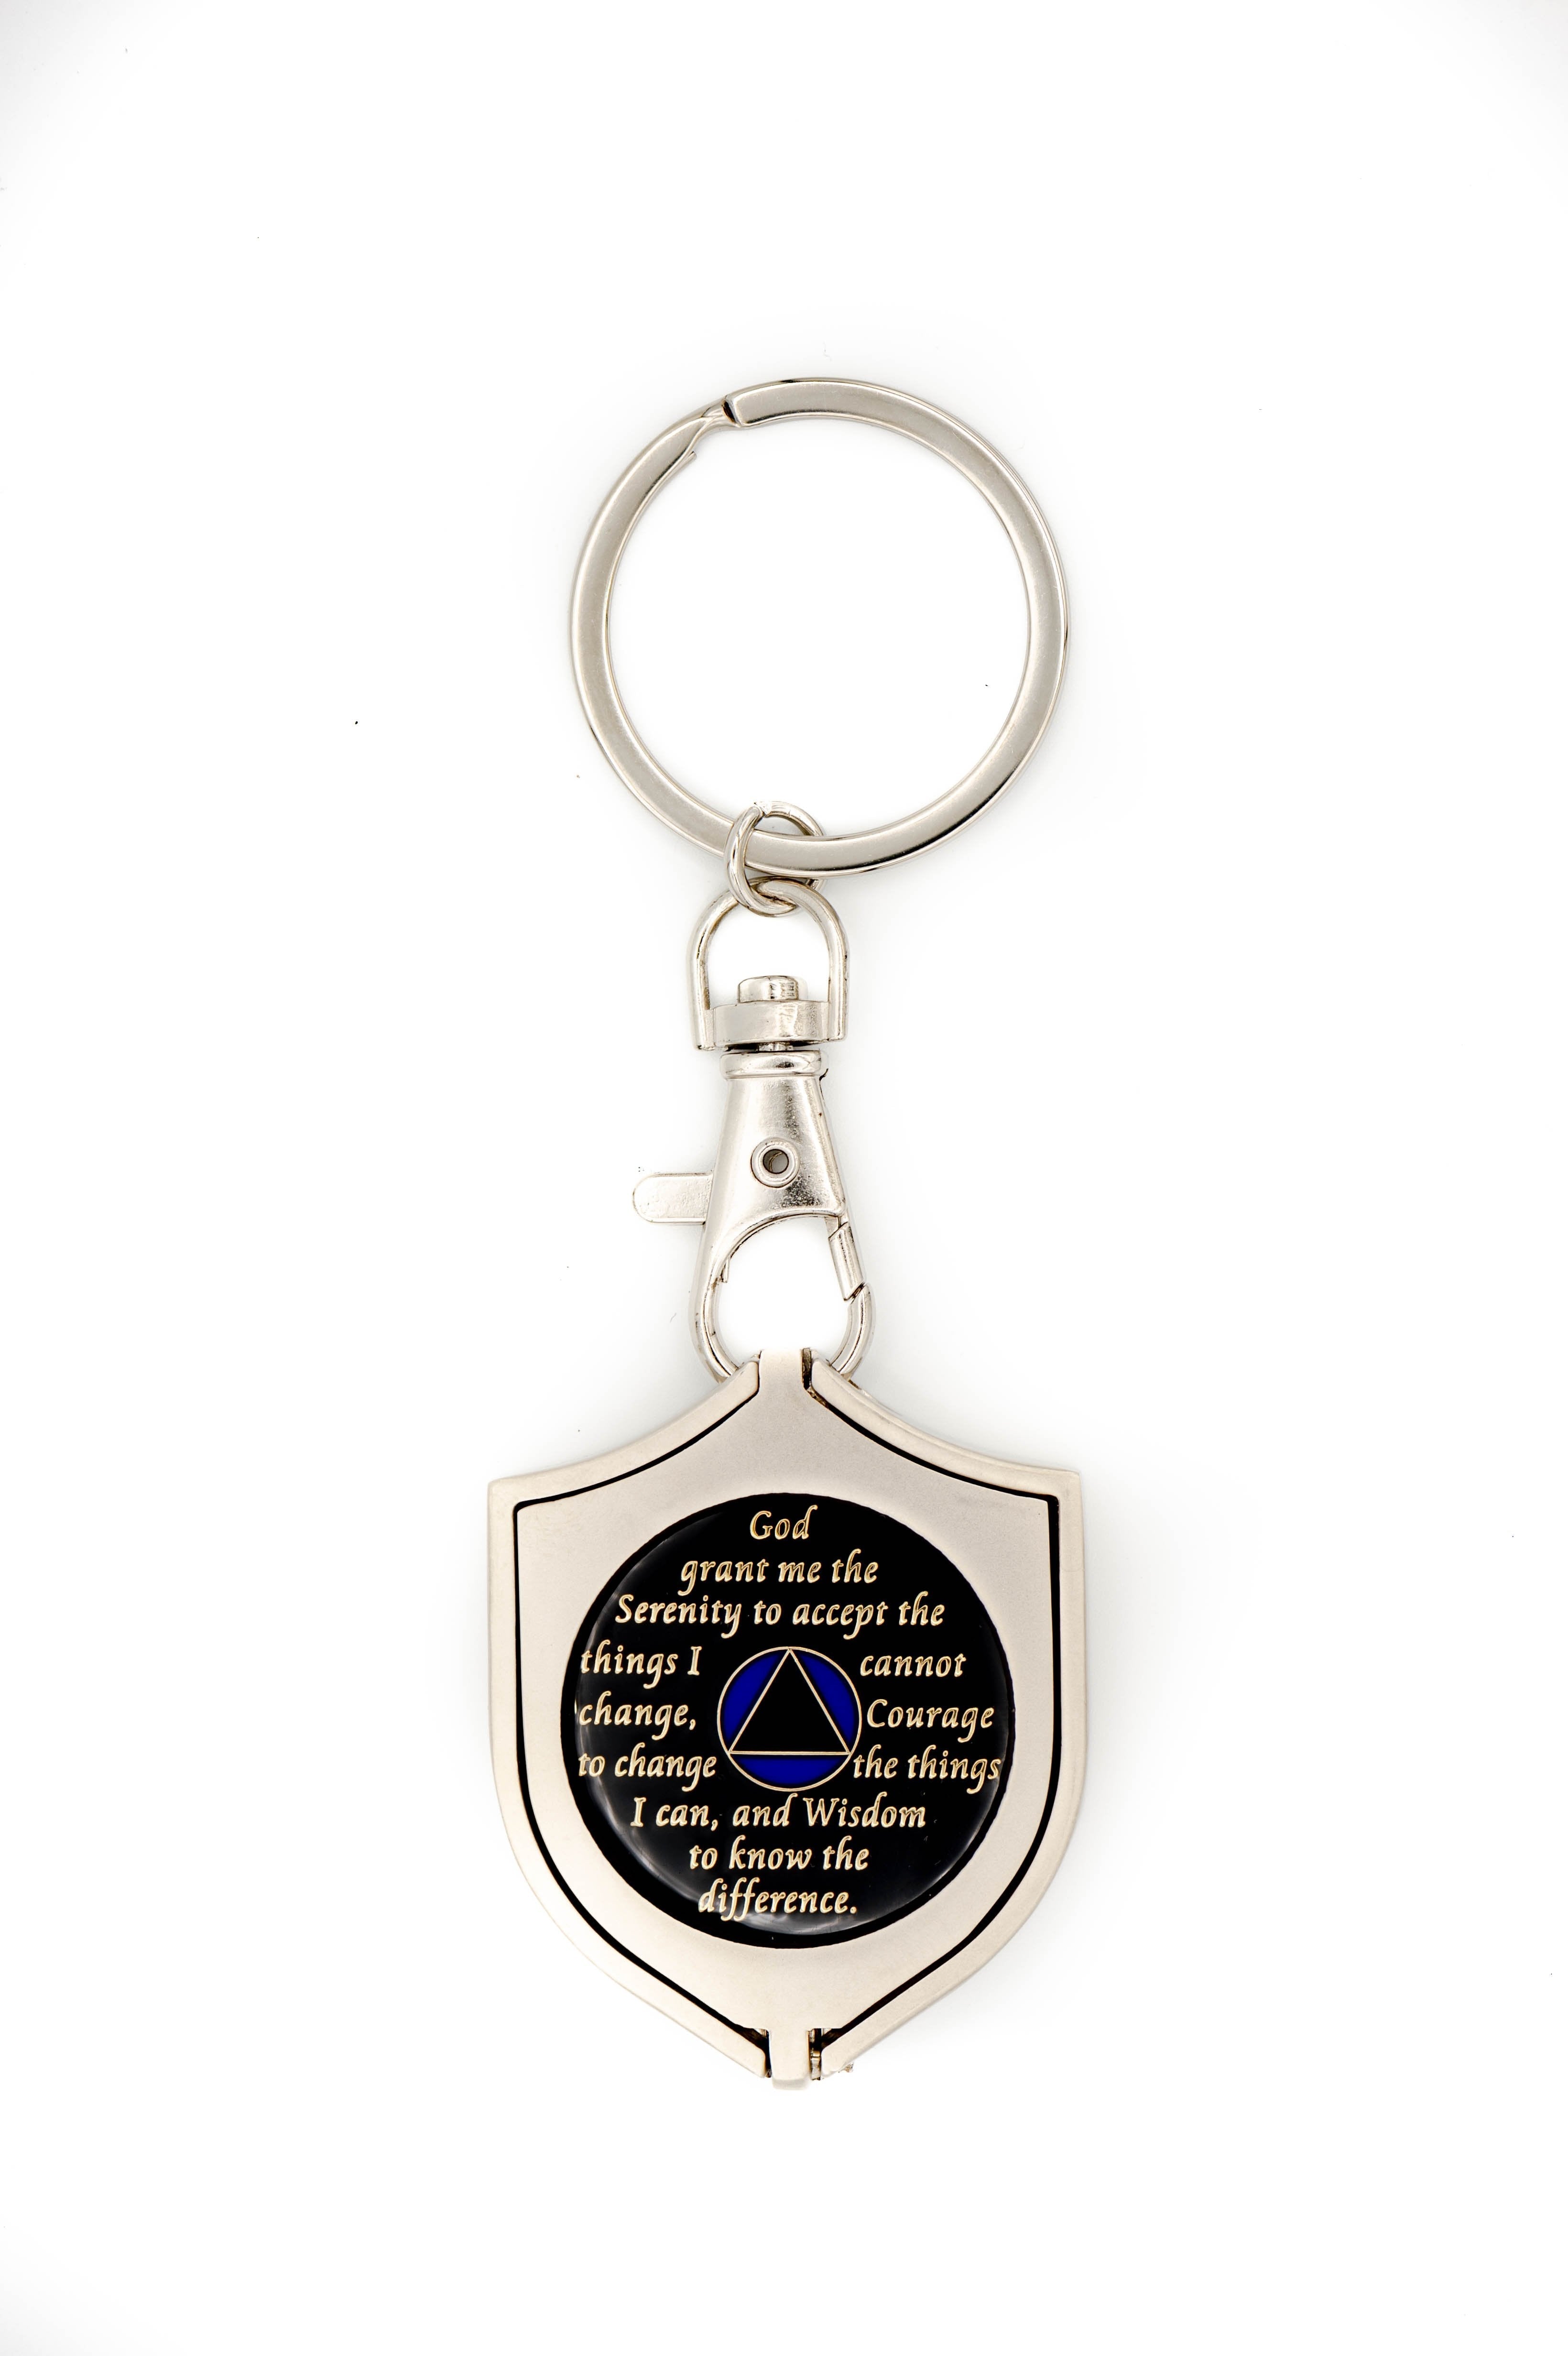 Silvertone Metal Autograph Key Holder and Bag Charm, HealthdesignShops